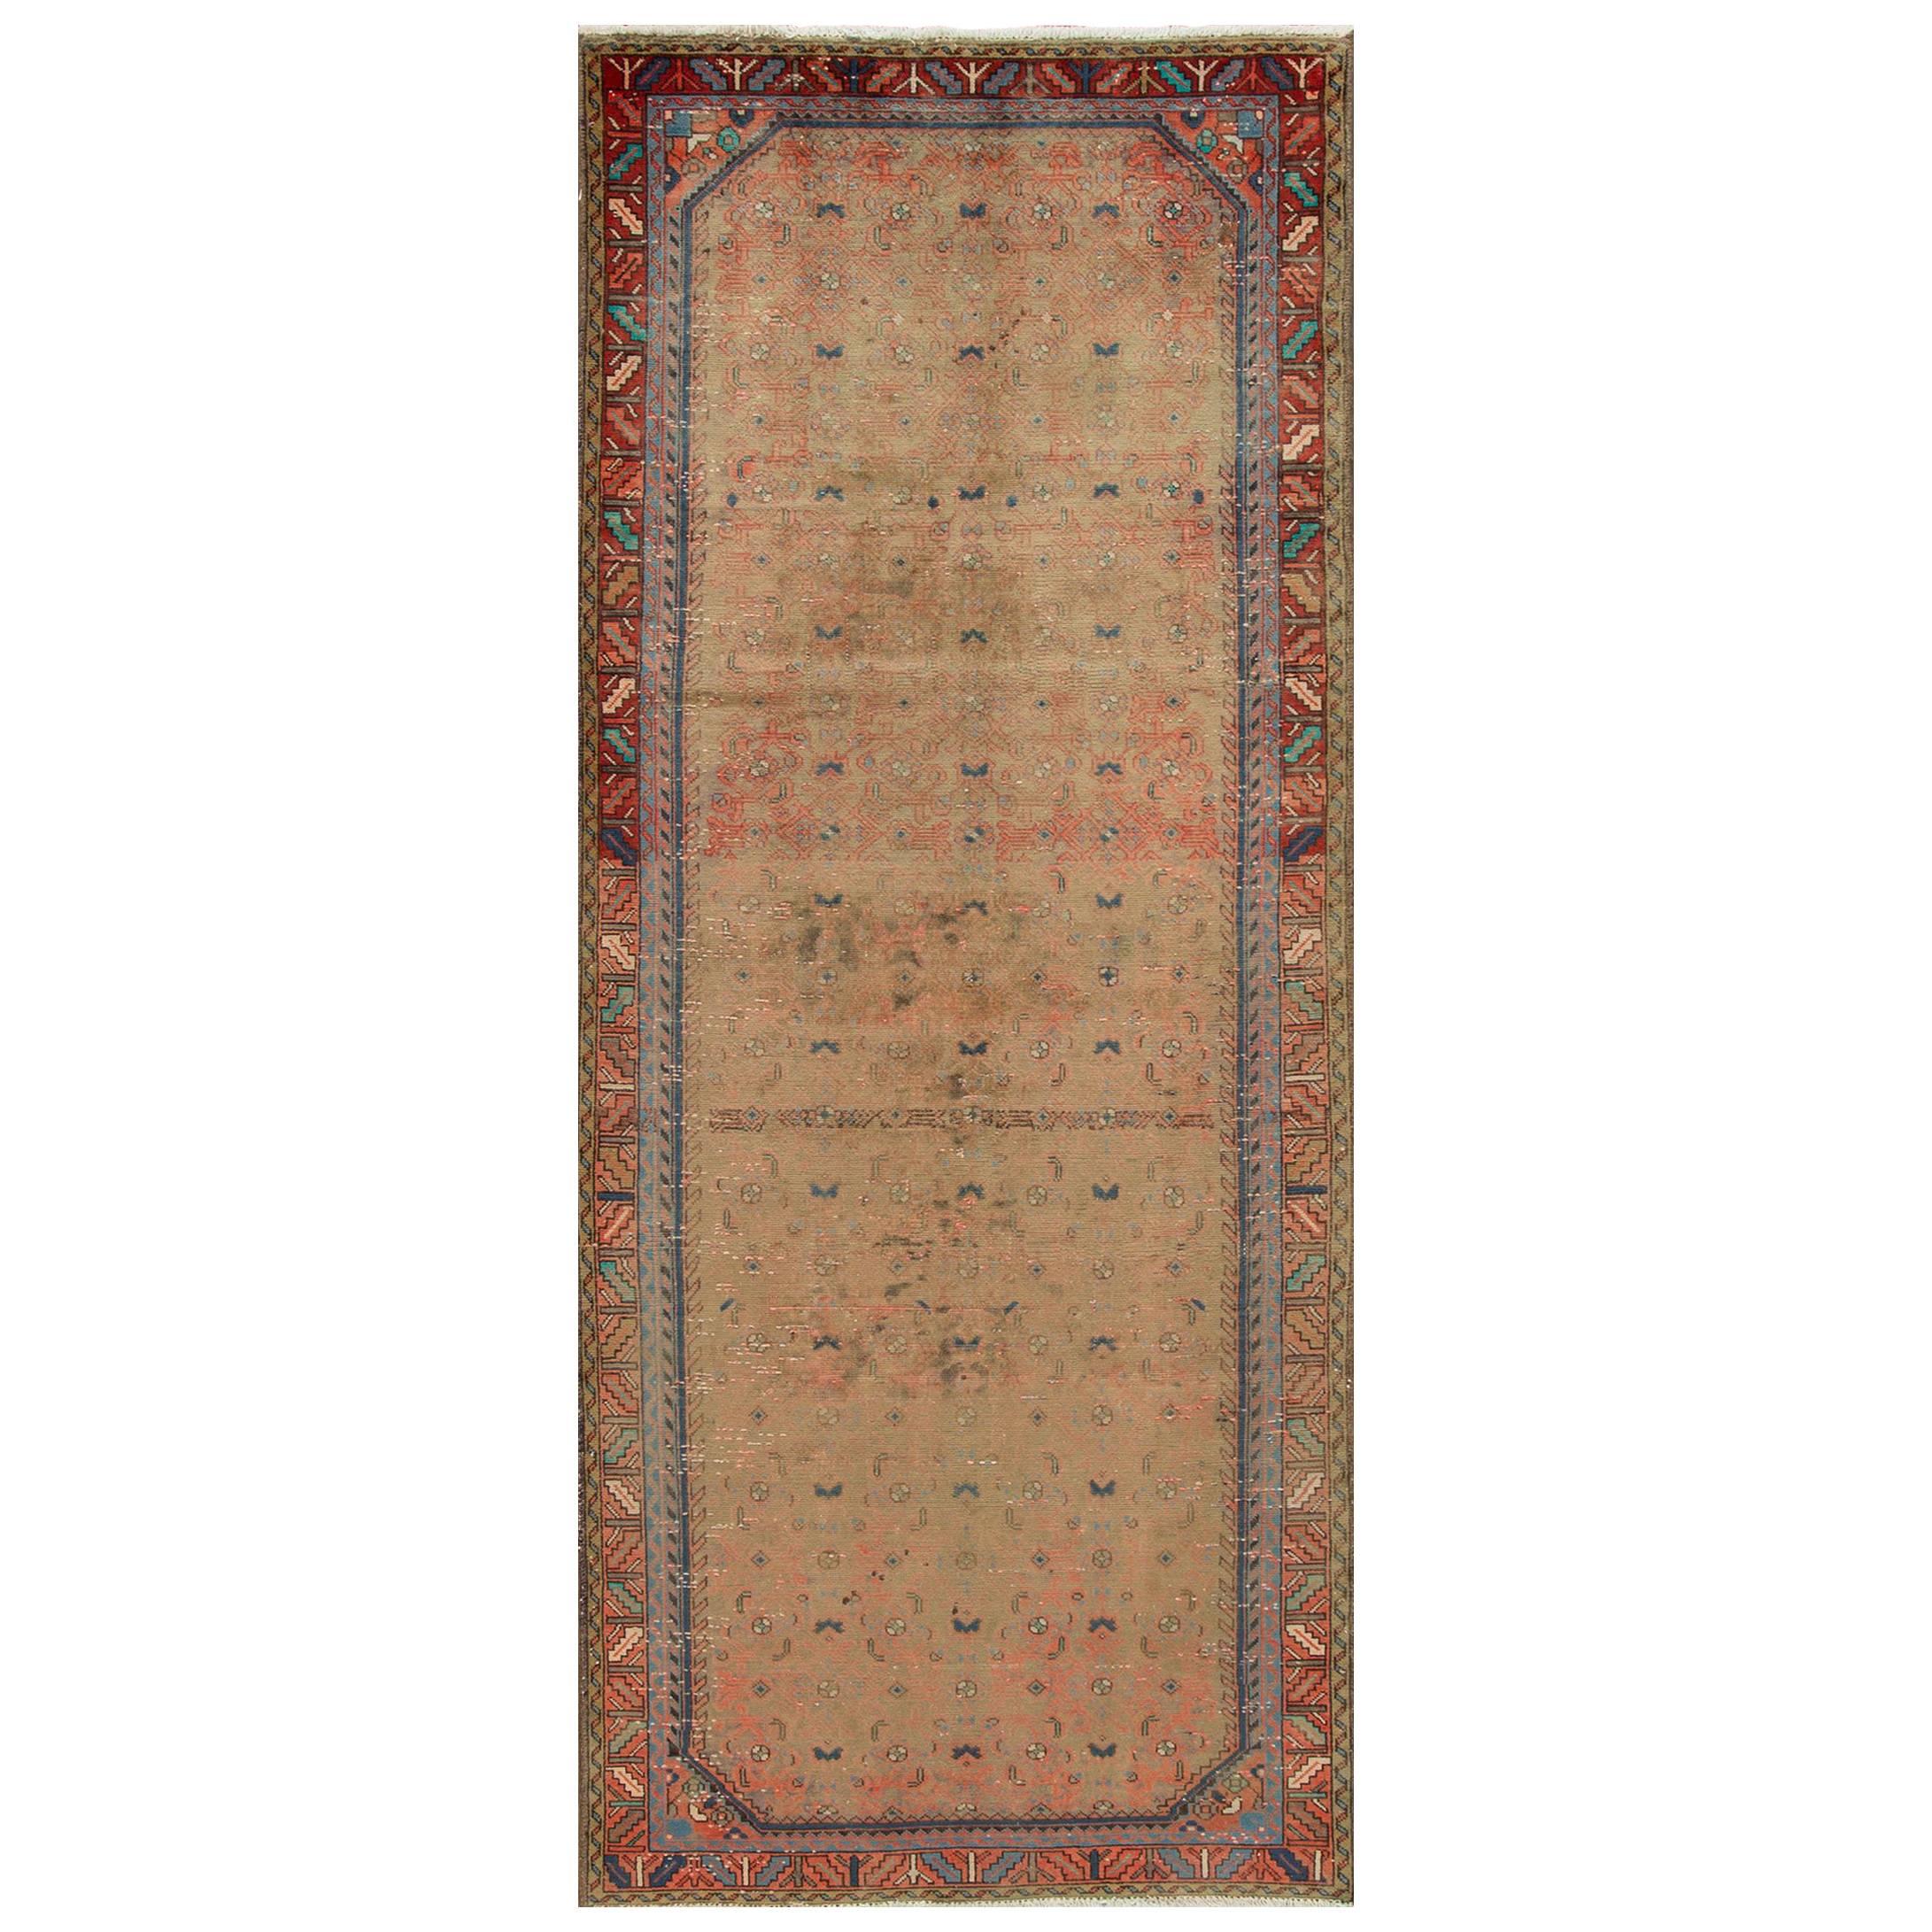 Antique Distressed Beige Persian Hamadan Runner Rug